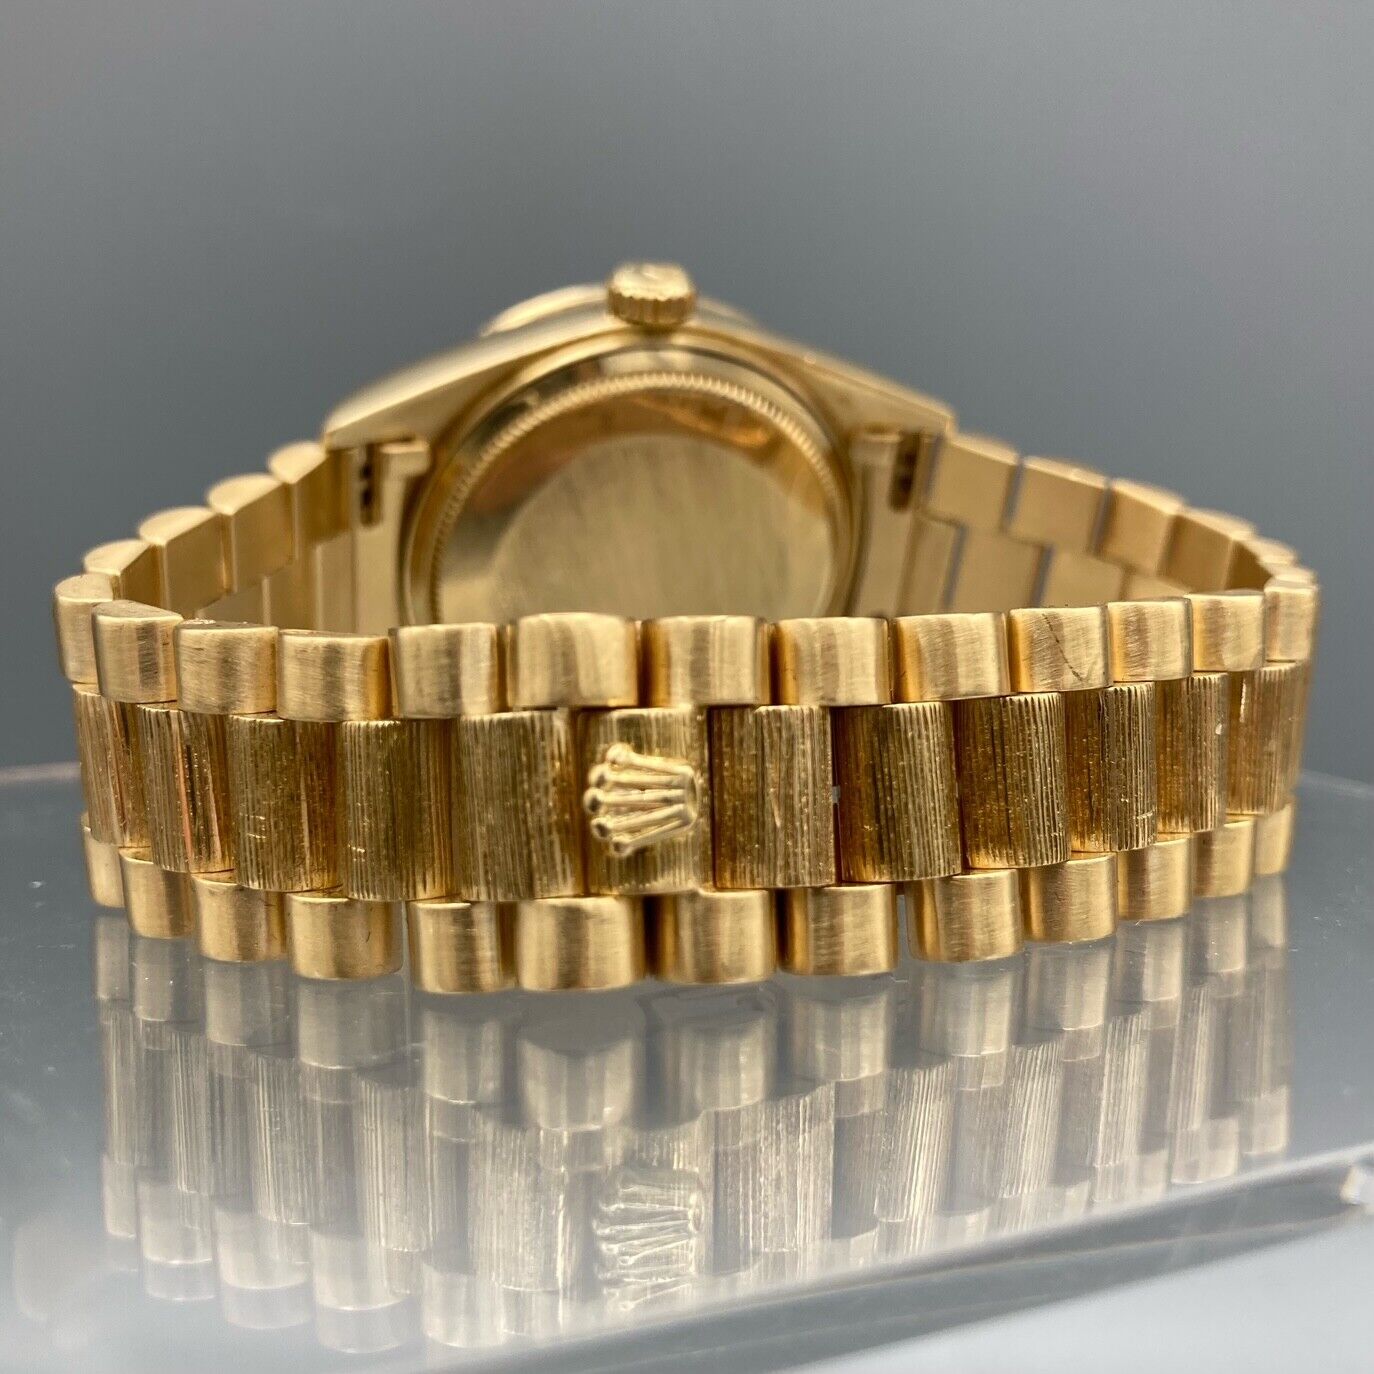 Rolex 18K Gold Bark Finish DayDate with Diamond Bezel and Black Stick Dial - 18108